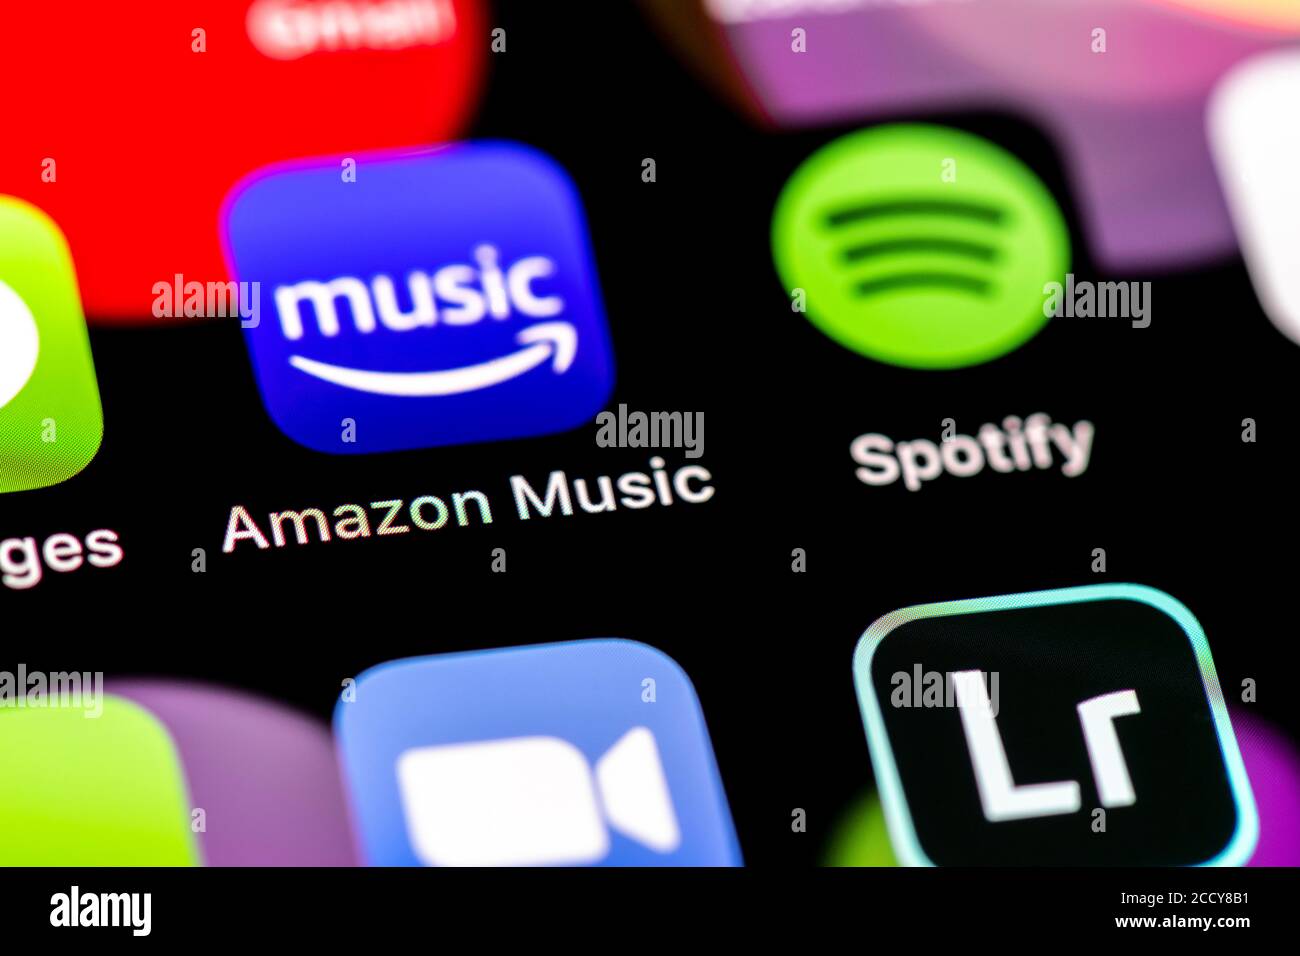 Amazon Music und Spotify, Musik-Streaming, App-Symbole auf einem Handy-Display,  iPhone, Smartphone, Nahaufnahme, Vollbild Stockfotografie - Alamy